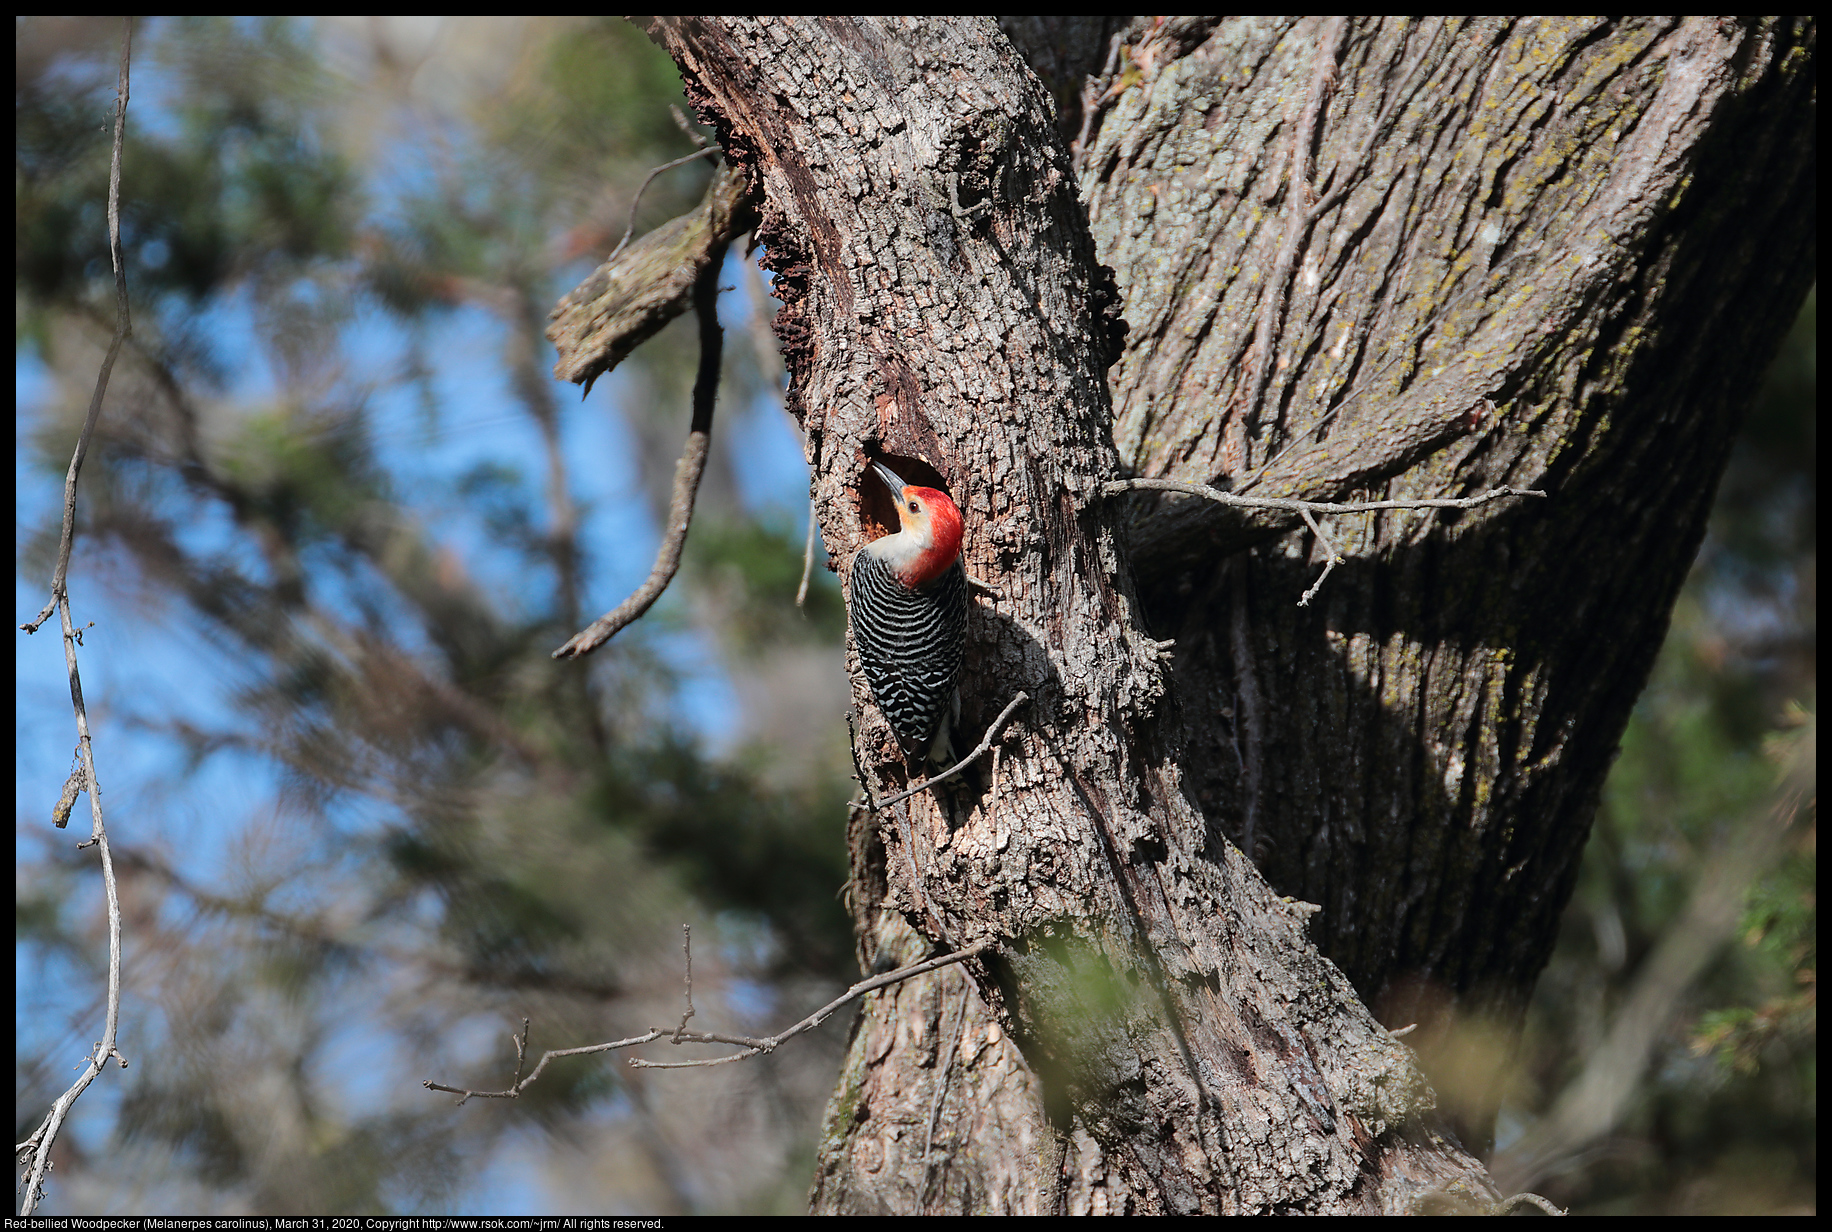 Red-bellied Woodpecker (Melanerpes carolinus), March 31, 2020